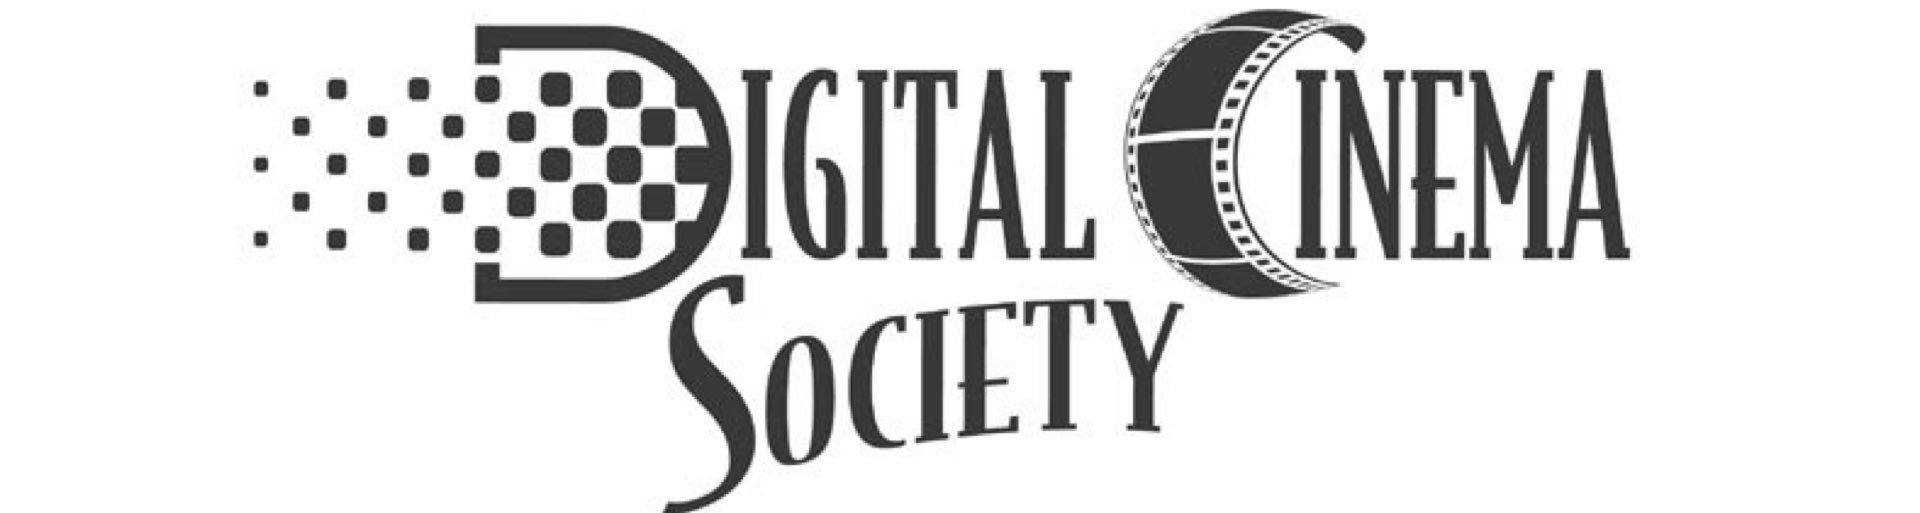 Digital Cinema Society (DCS)